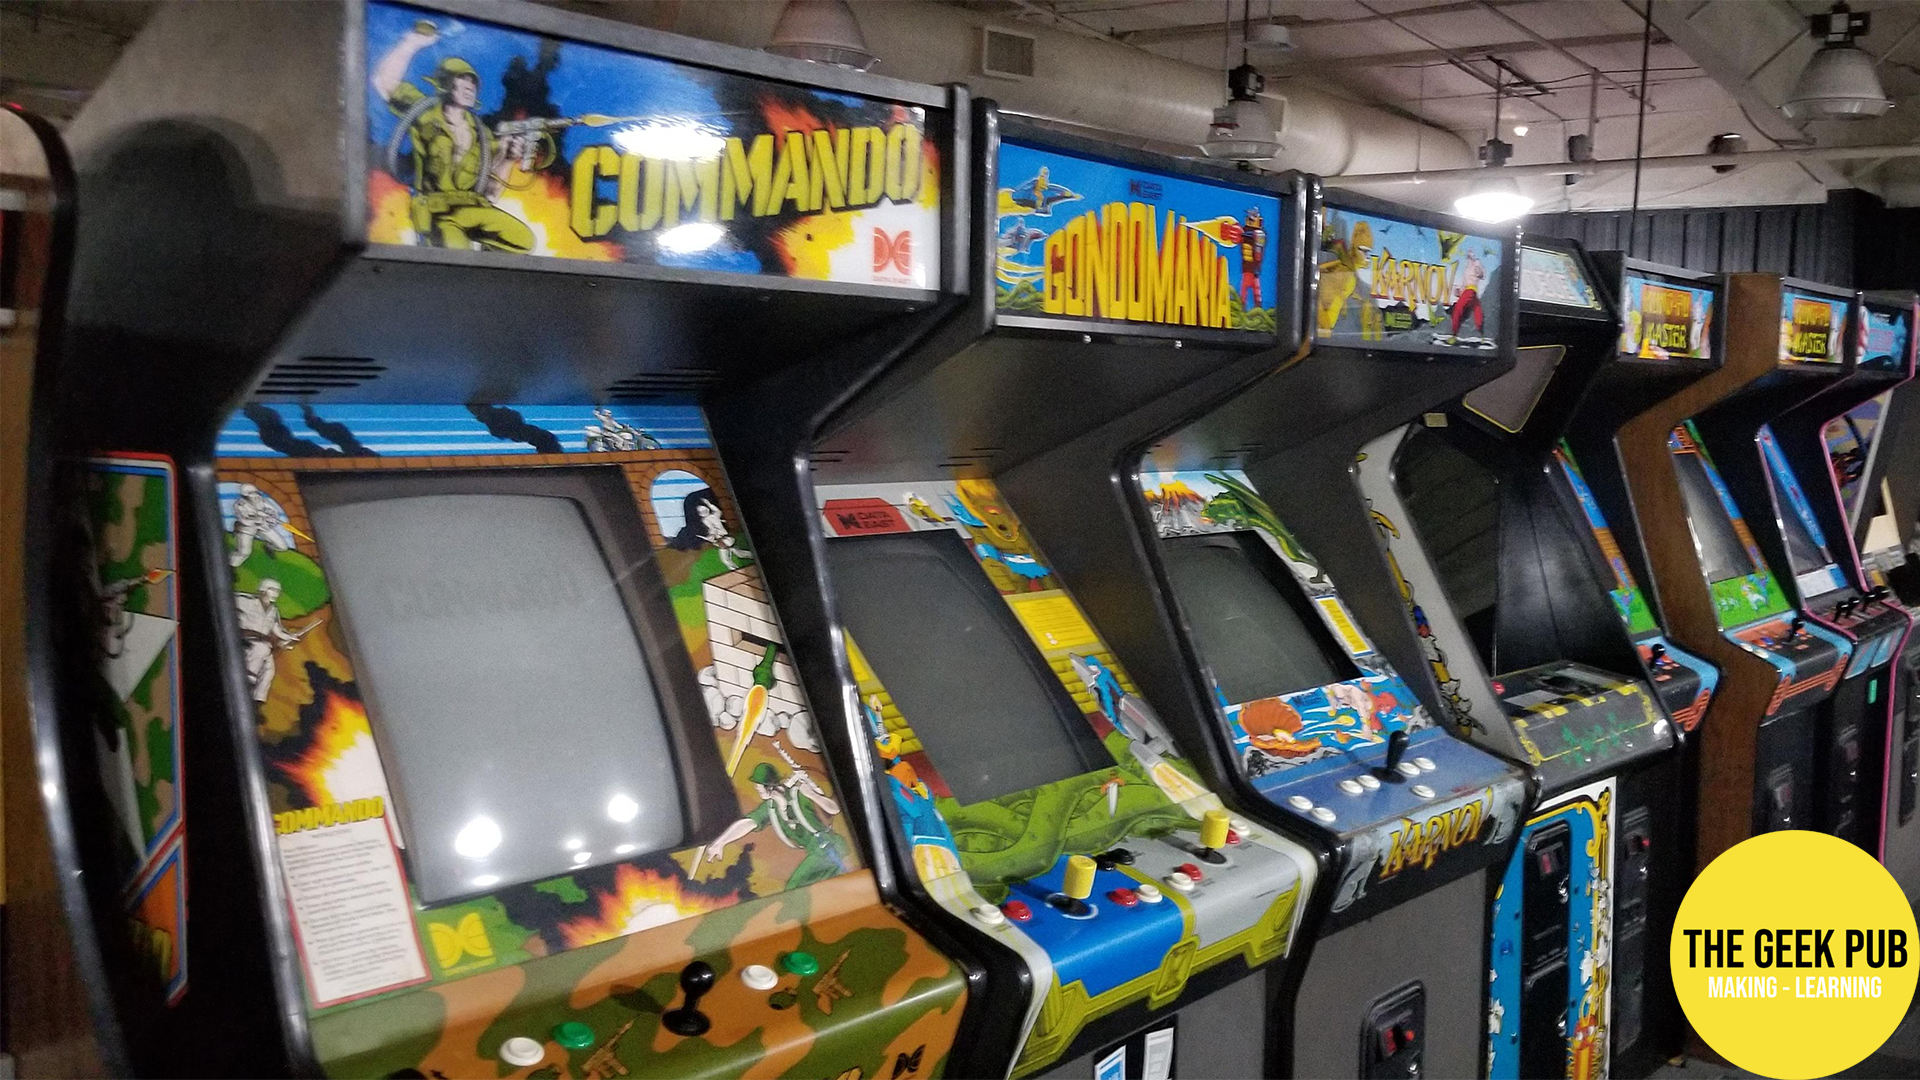 Row of arcade Machines